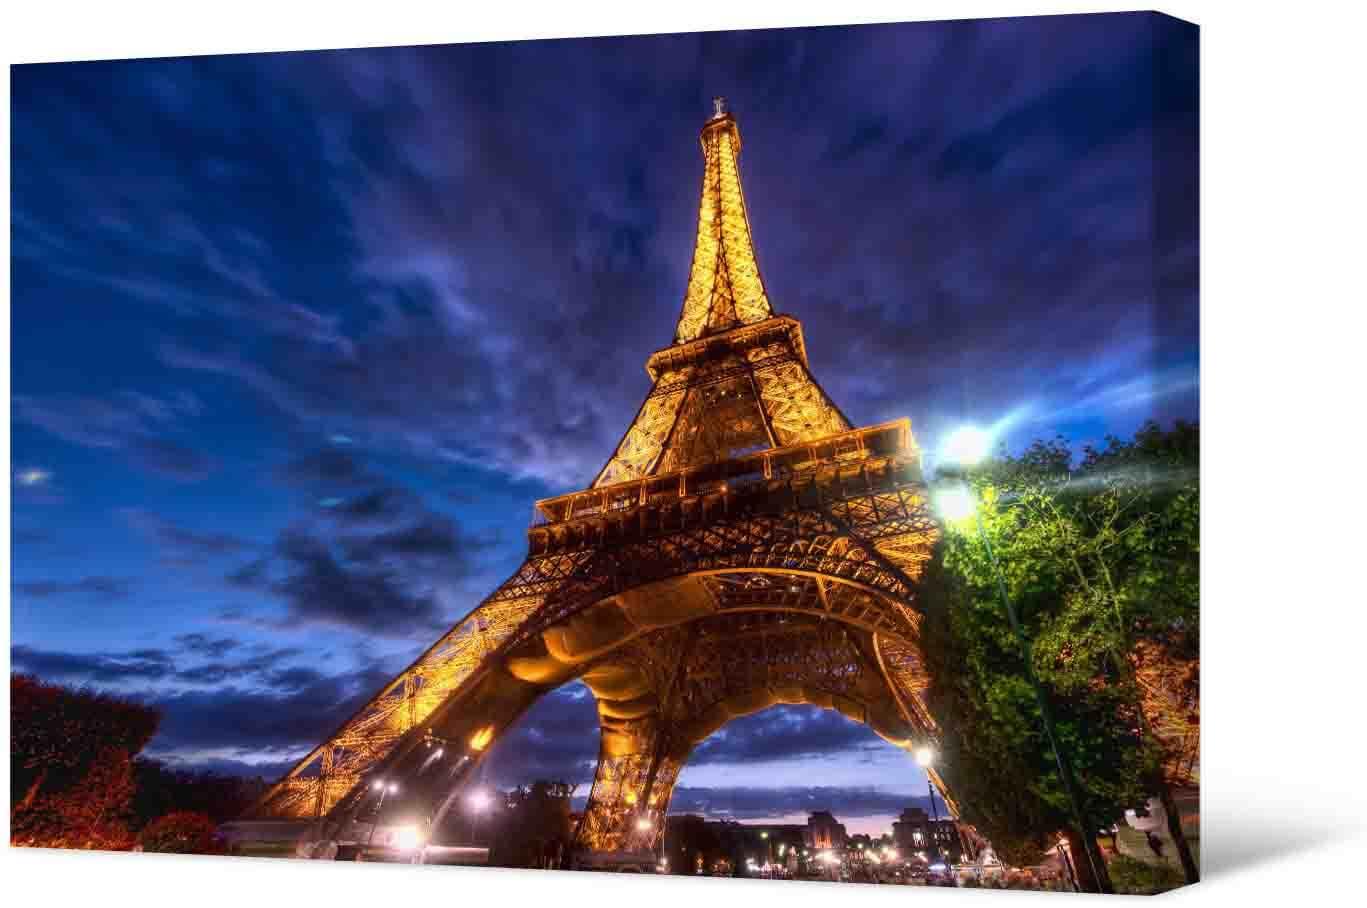 Picture Photograph - Eiffel Tower in Paris